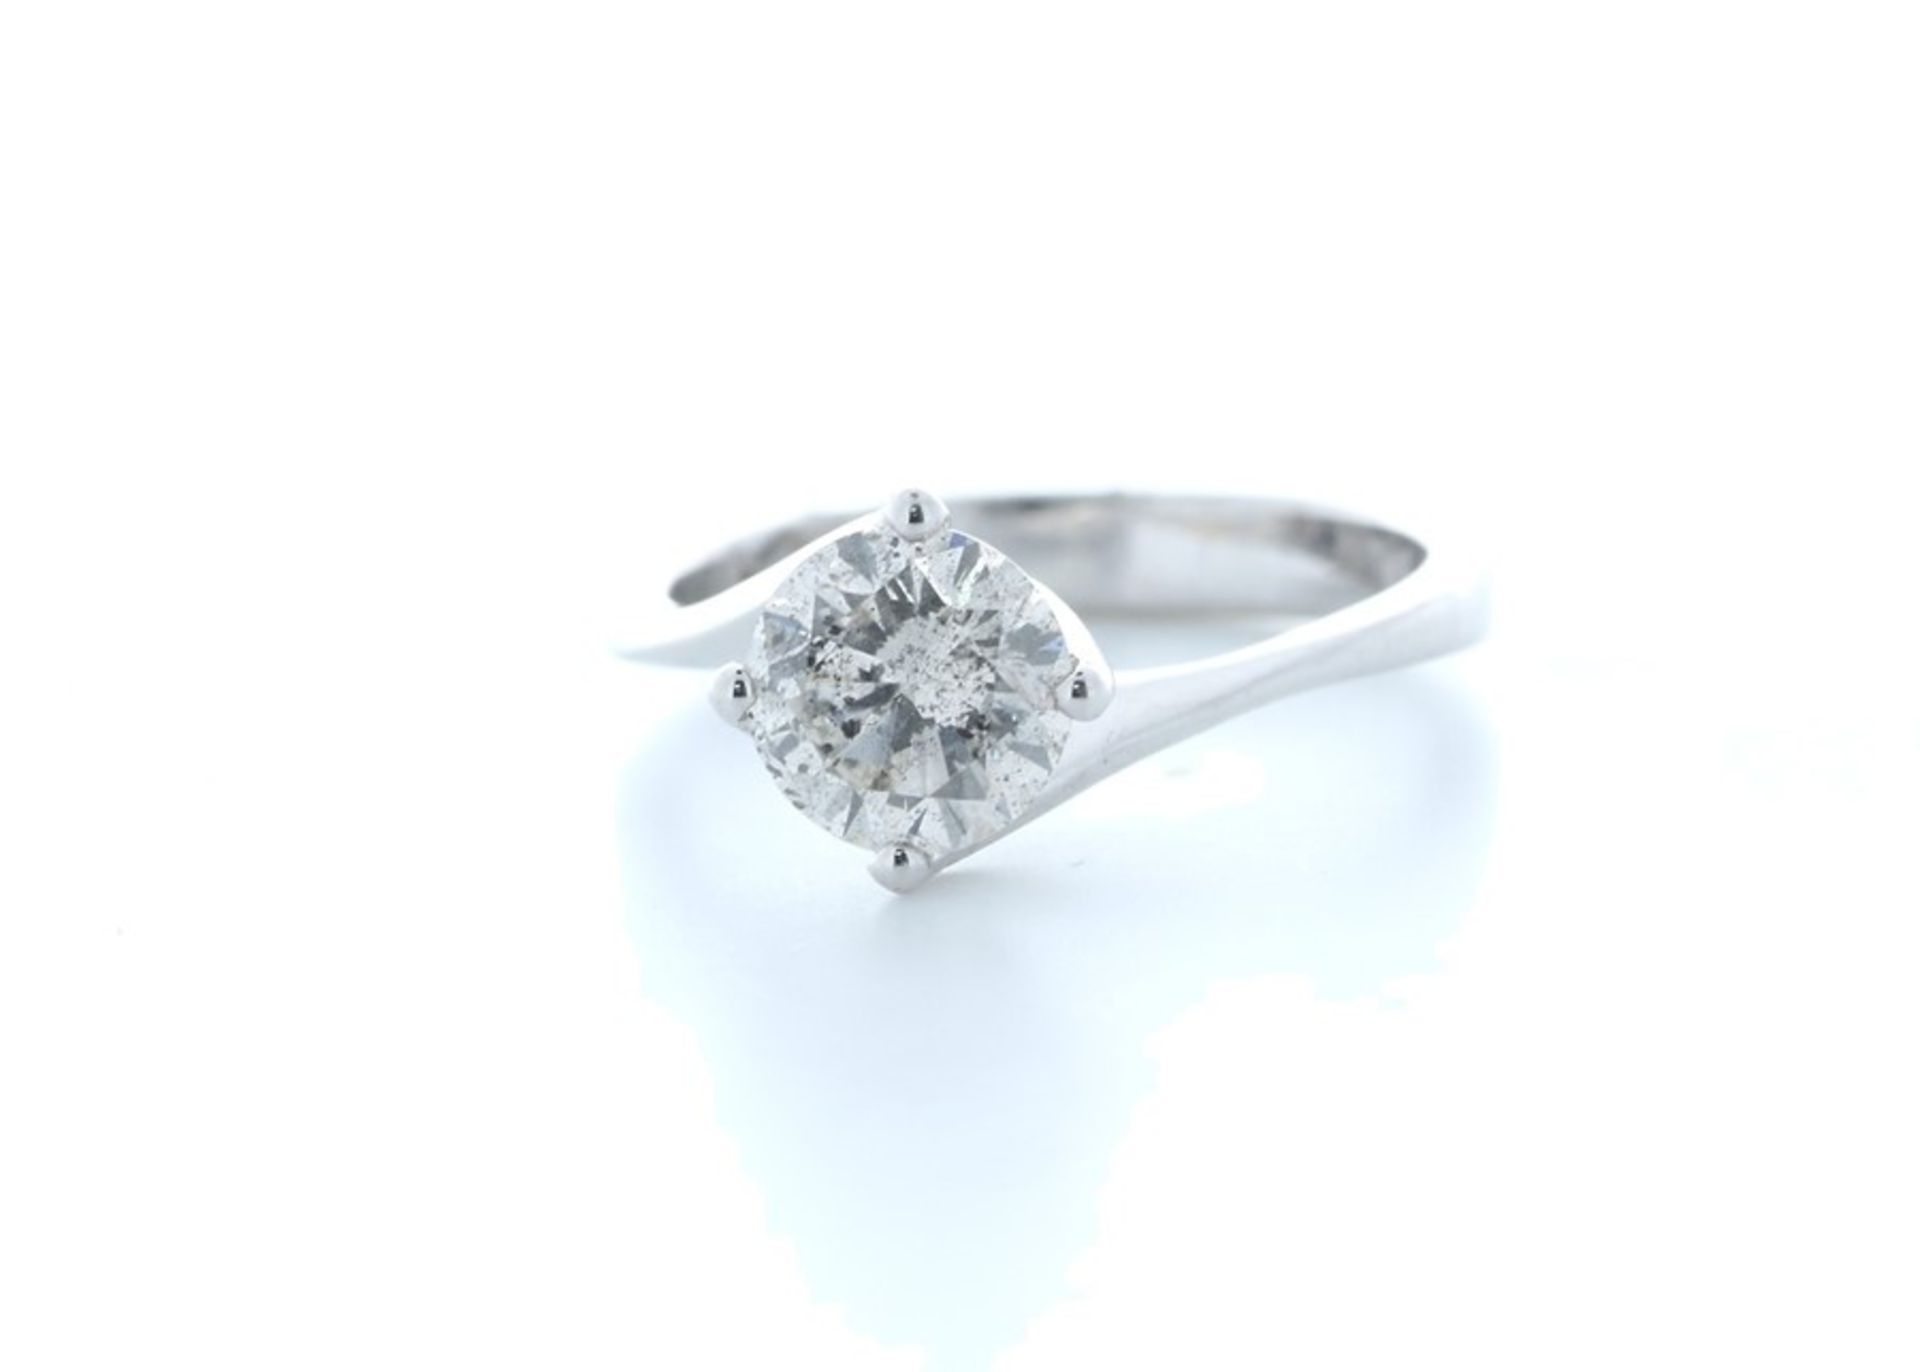 18ct White Gold Single Stone Prong Set Diamond Ring 1.10 Carats - Valued by IDI £12,000.00 - Image 2 of 5